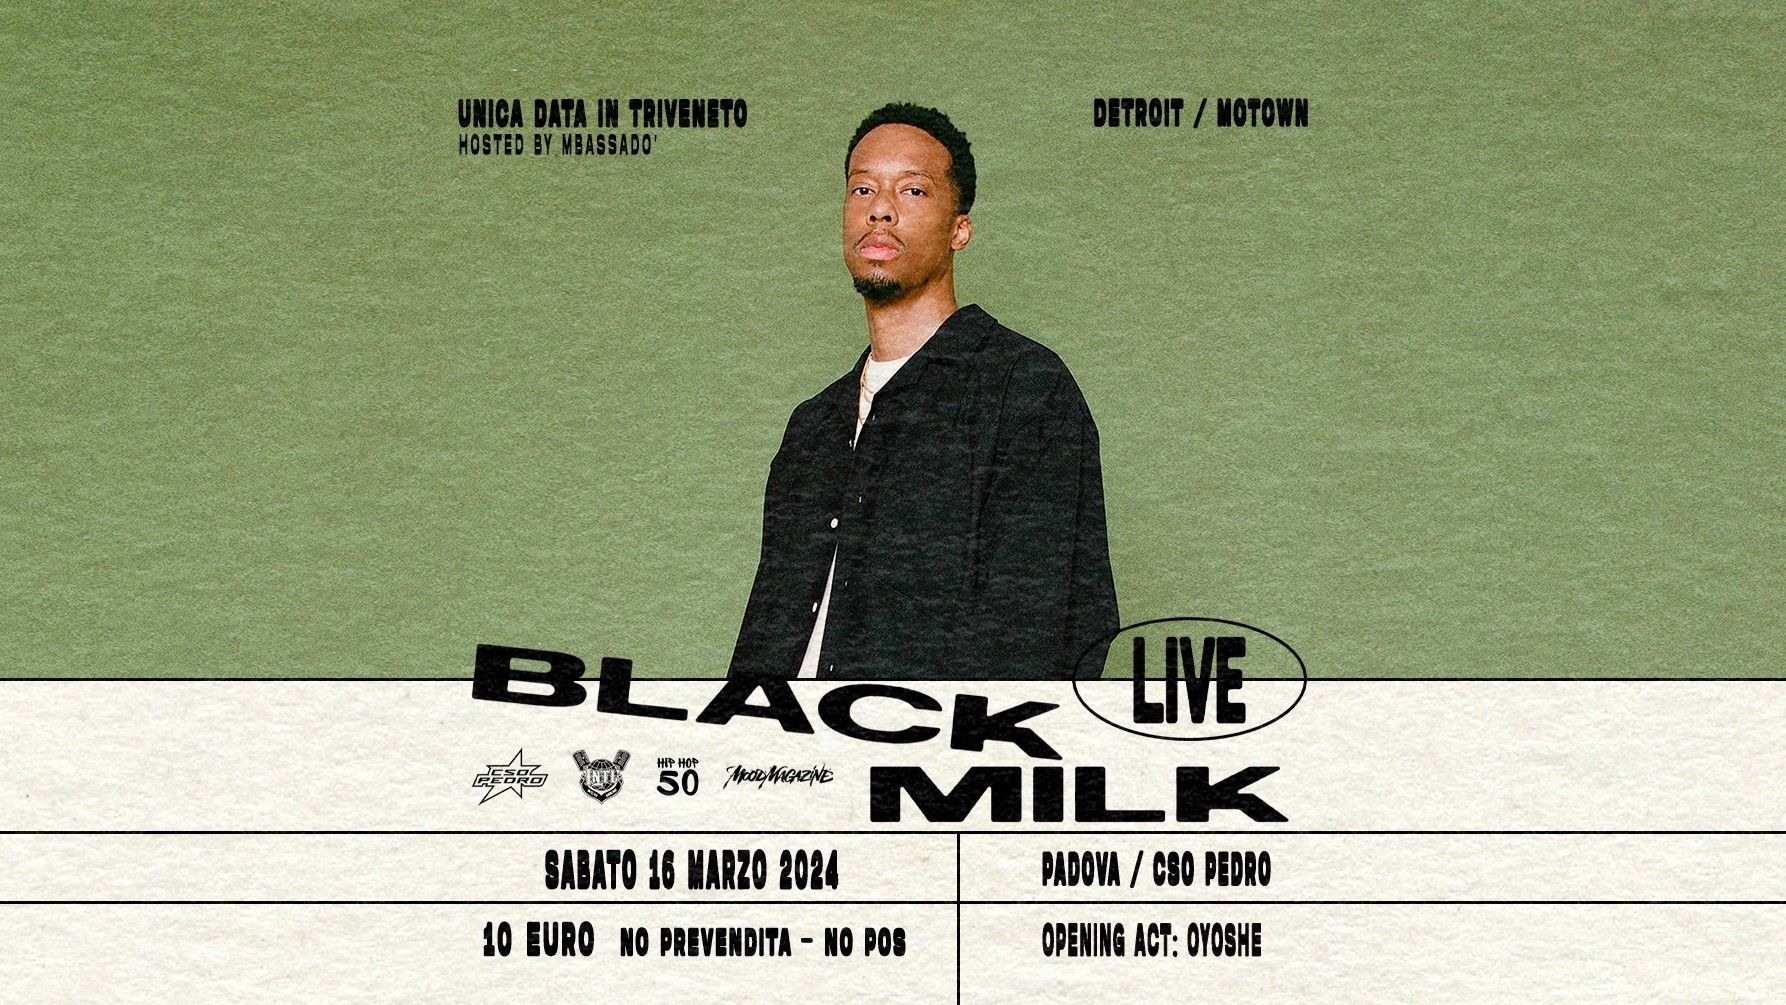 Black Milk (Detroit/motown) + Oyoshe